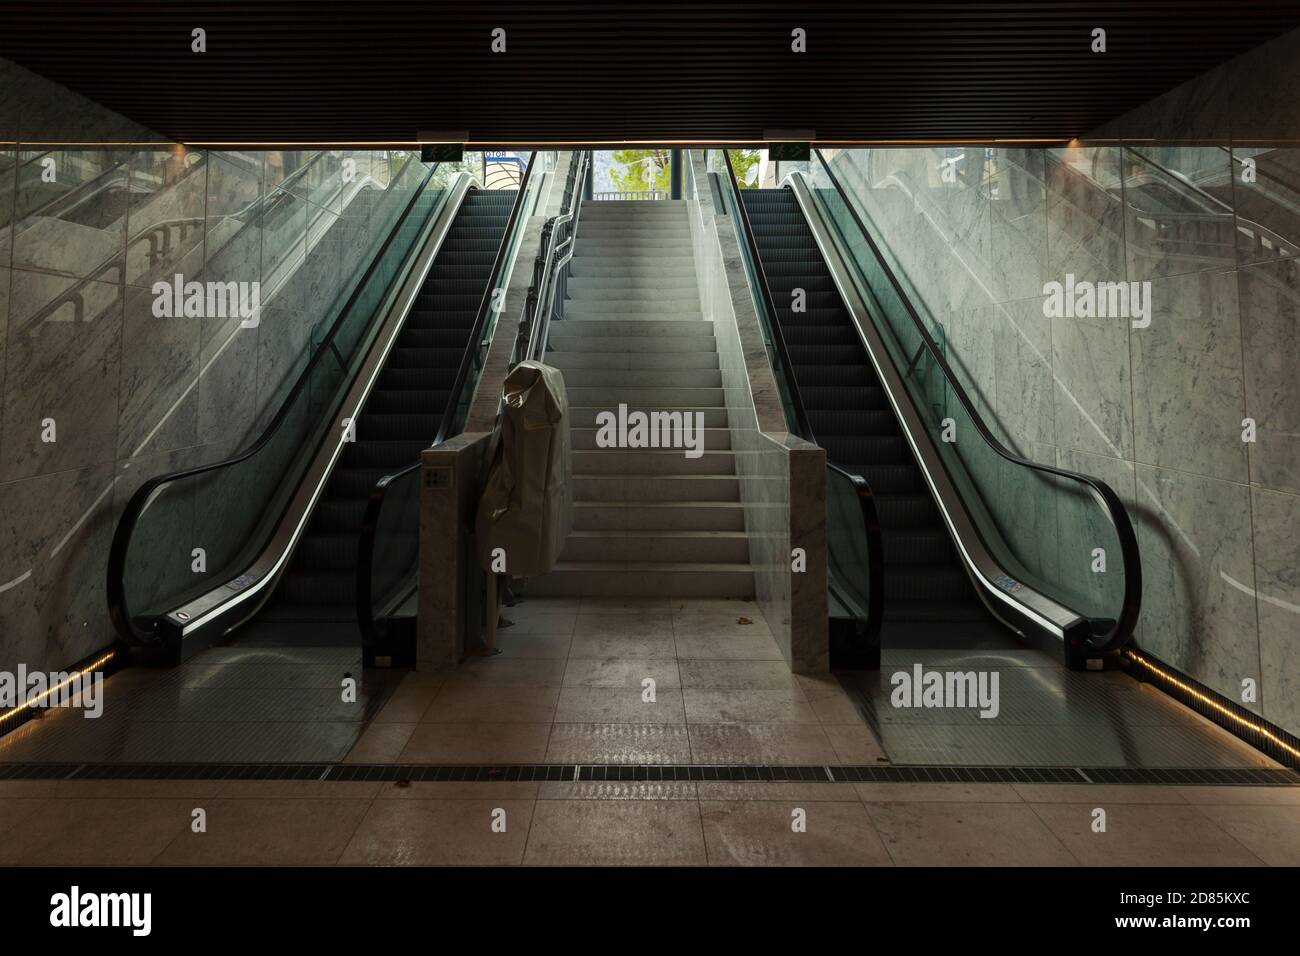 large empty underground passage with escalators Stock Photo